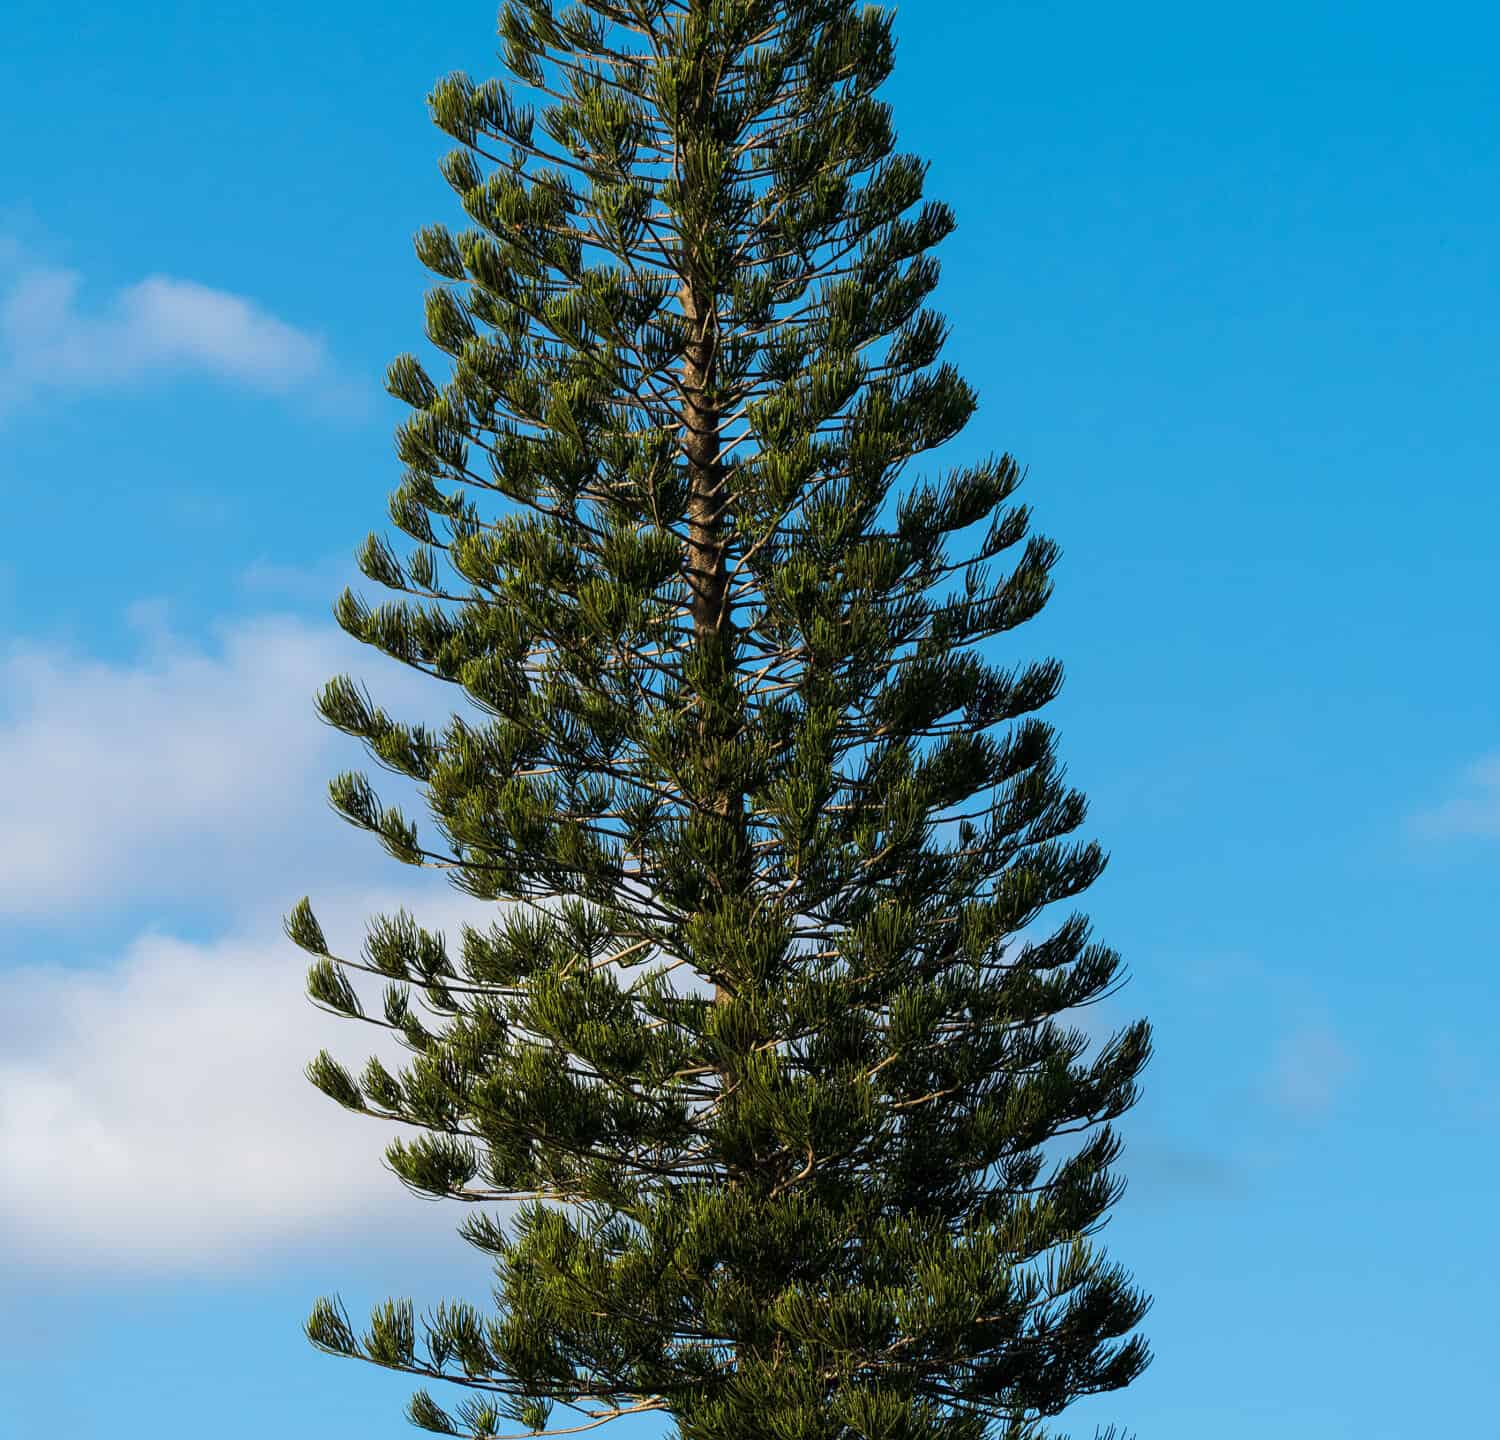 Honduran pine tree - an evergreen tree in a conical shape